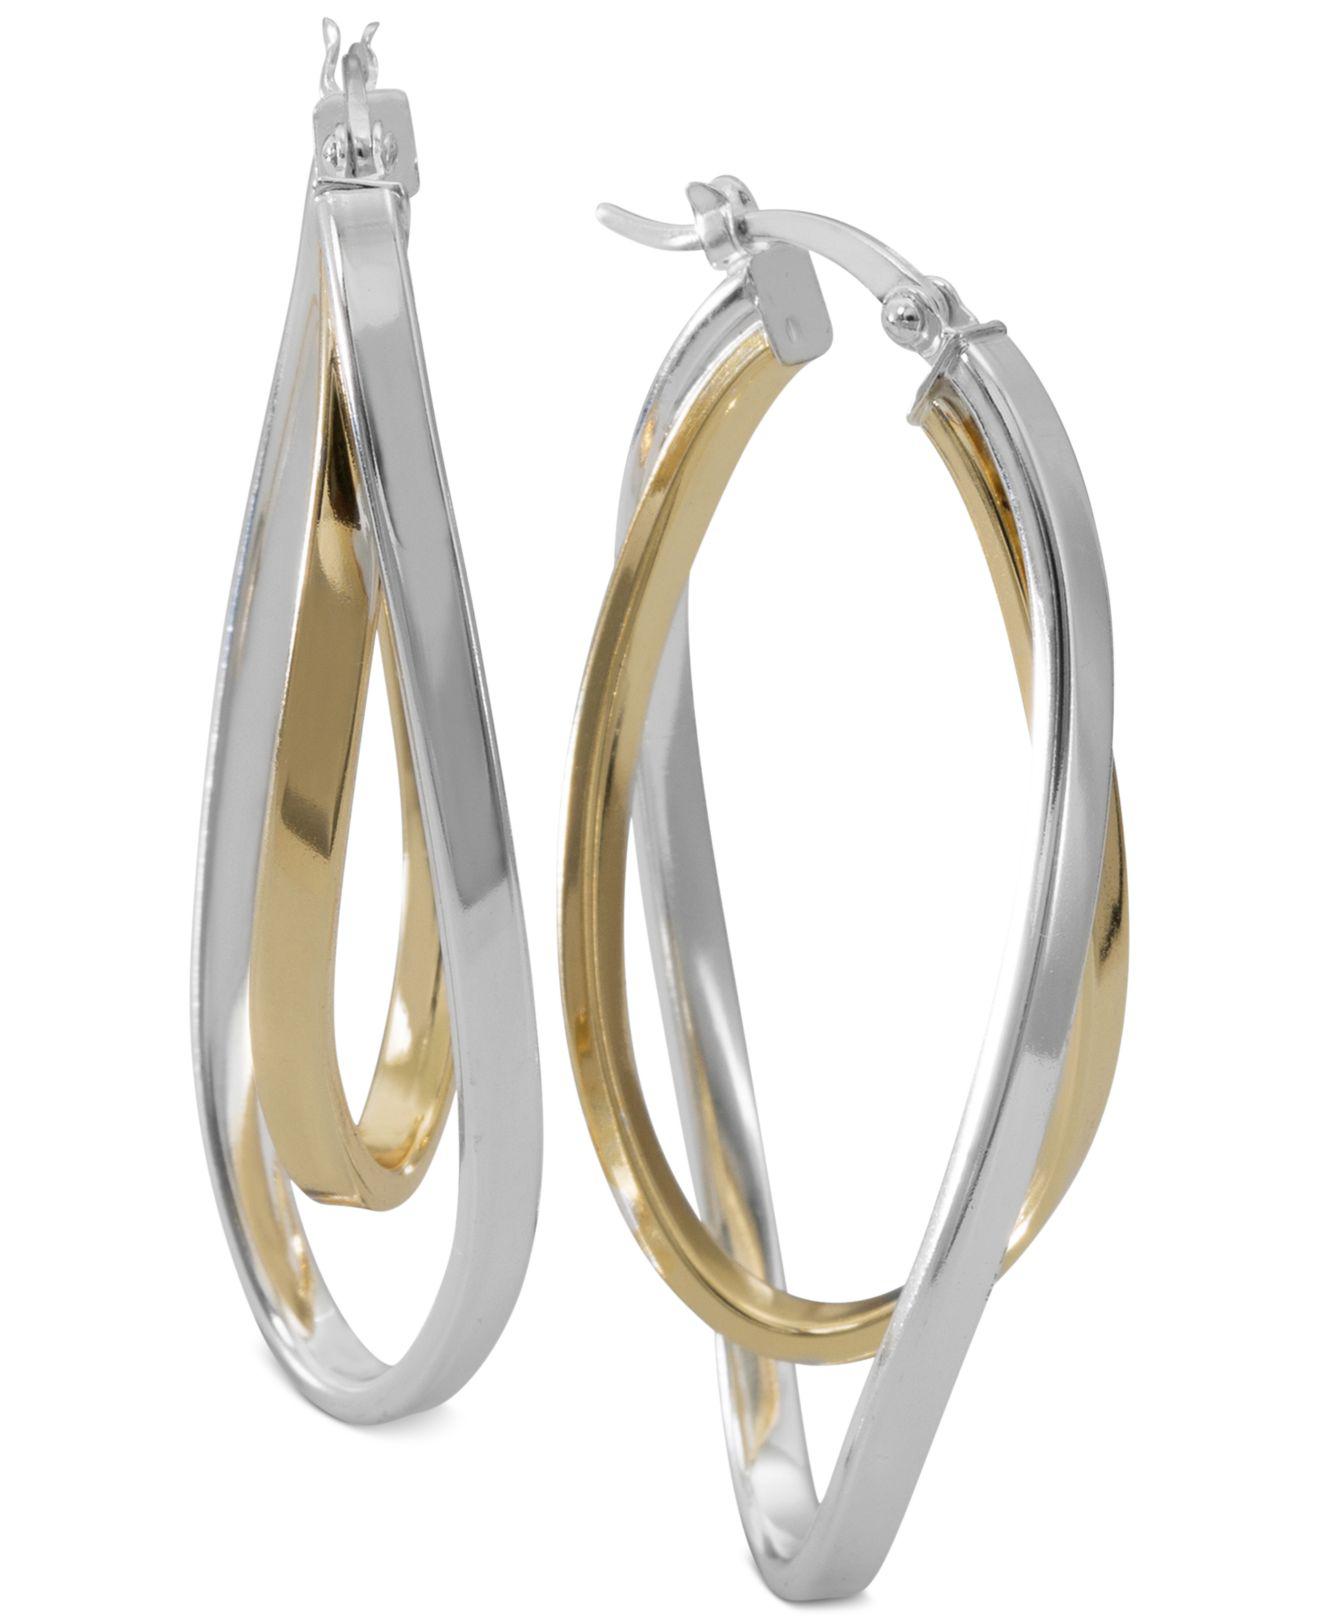 Macys Two Tone Twisted Hoop Earrings In Sterling Silver And 14k Gold Plate In Metallic Lyst 